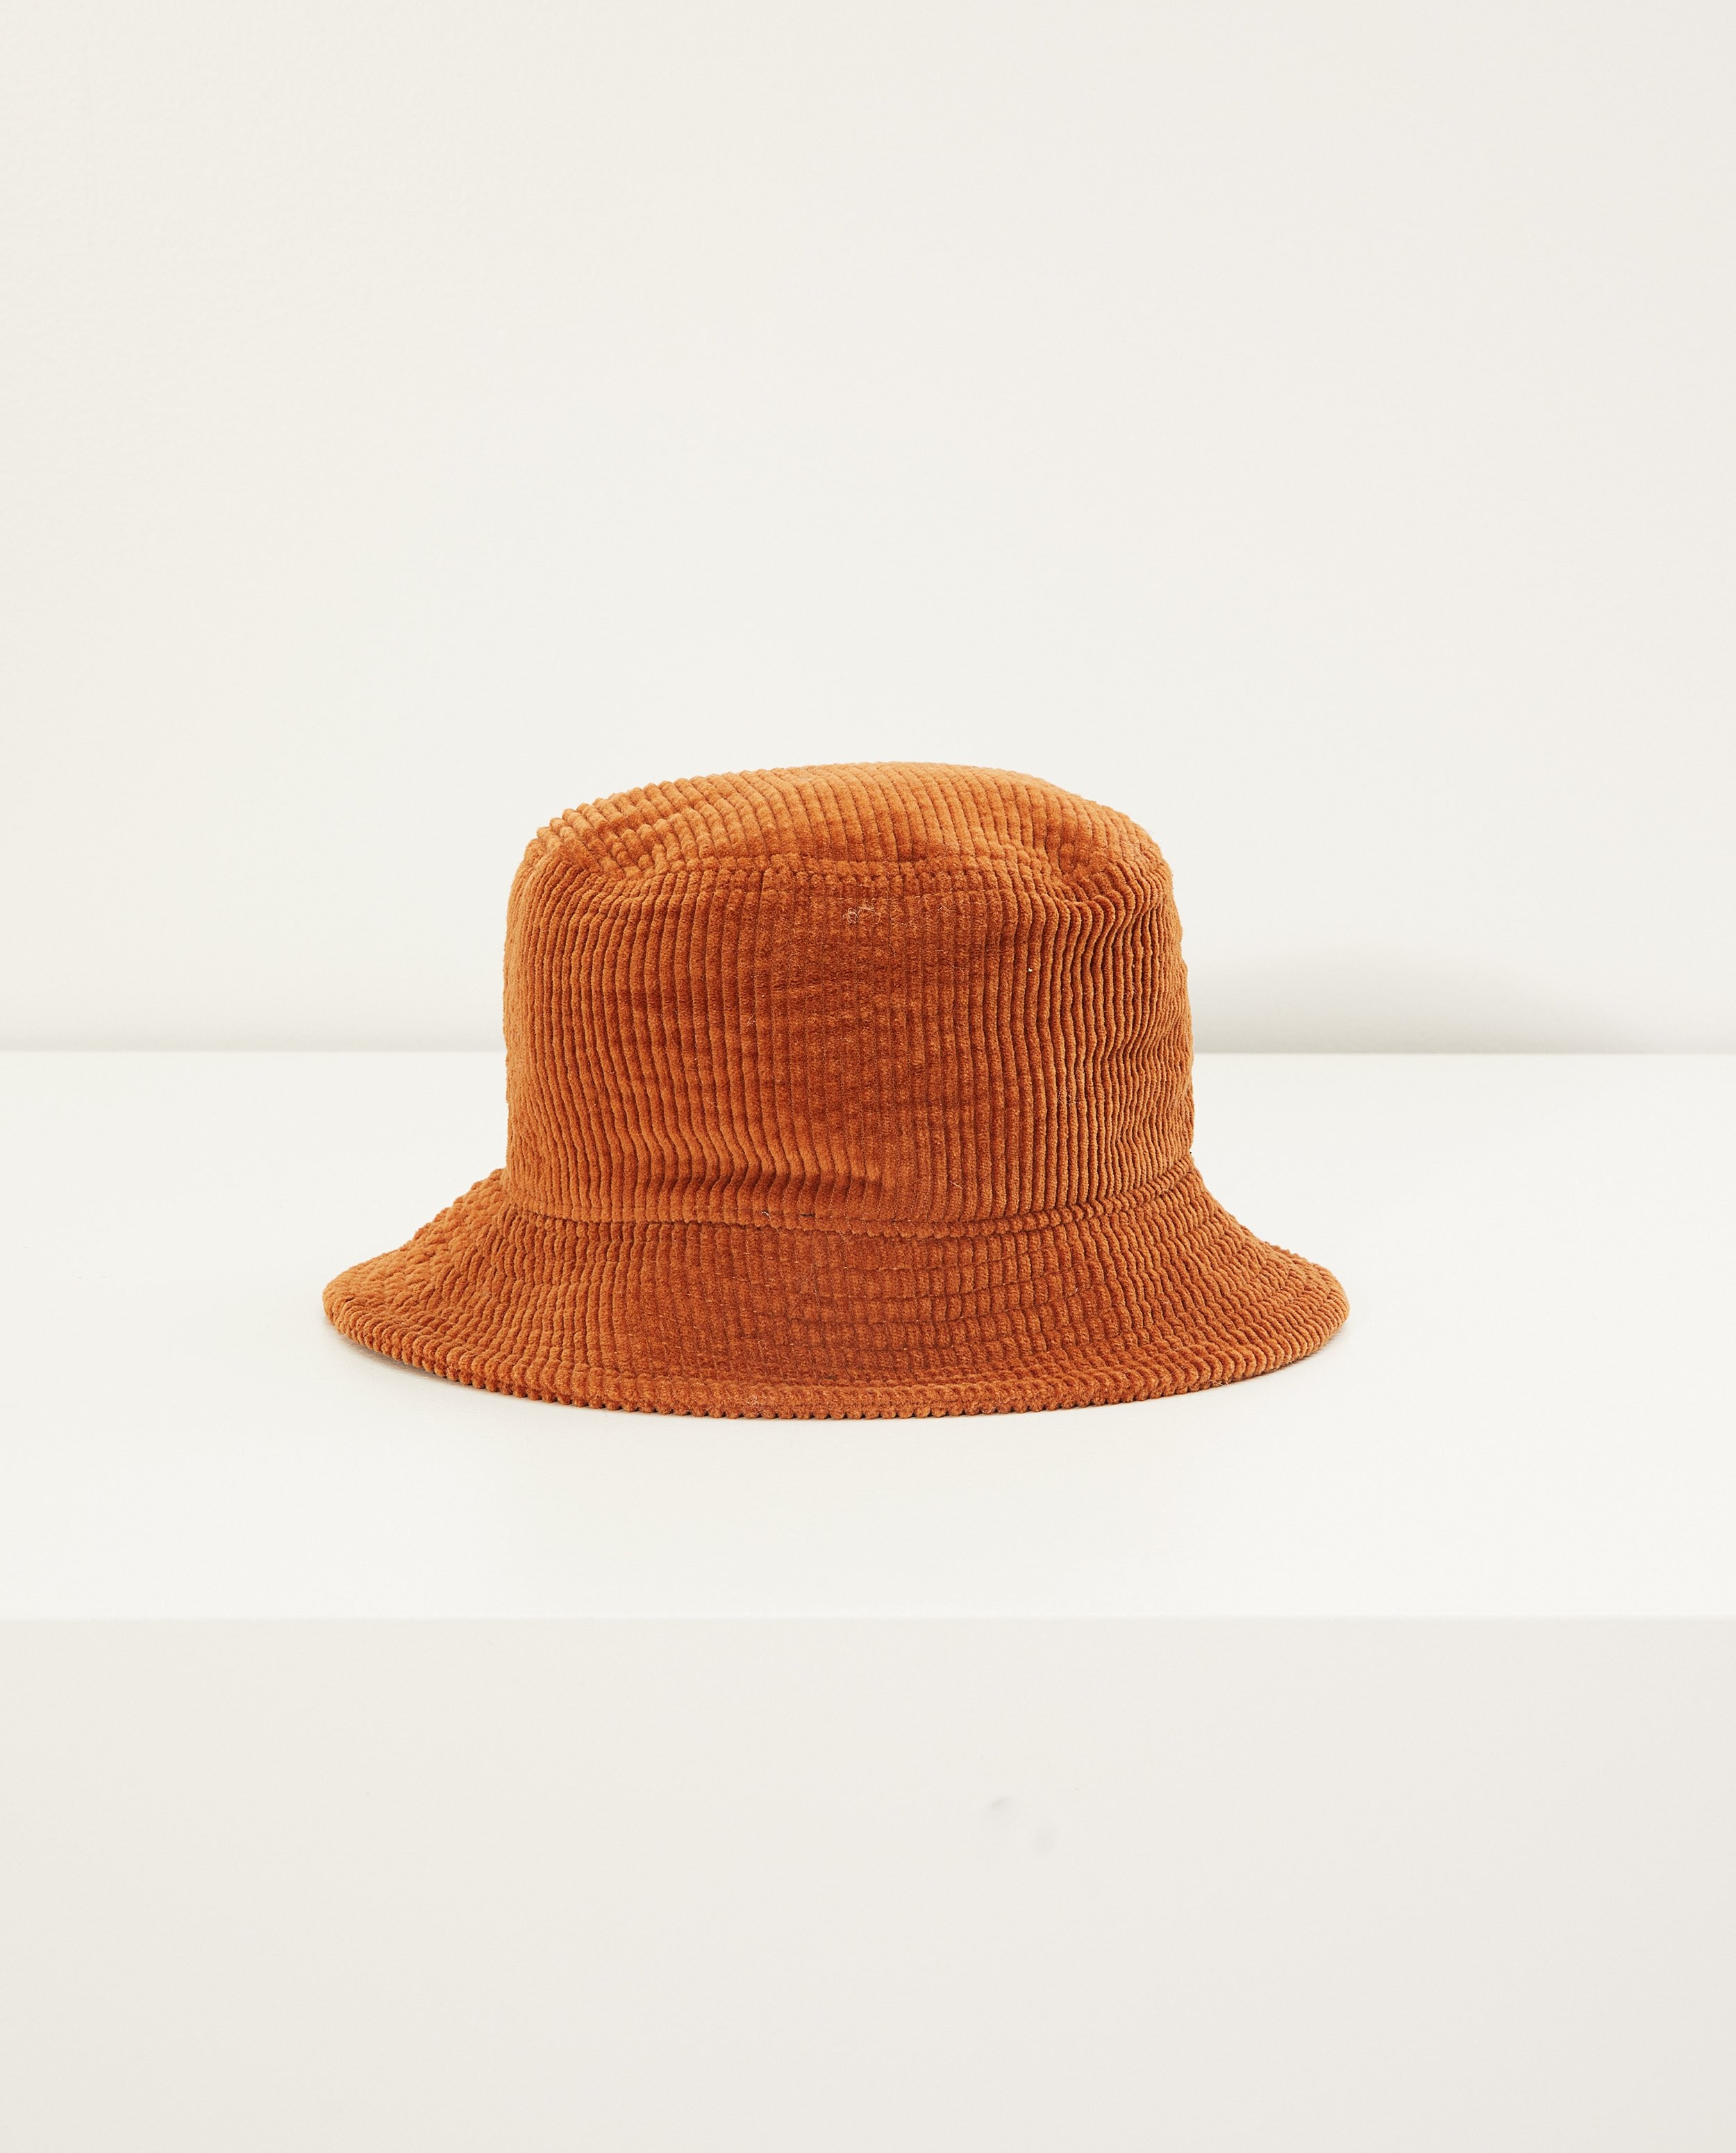 Bruine hoed van ribfluweel Pieces - allover - Pieces